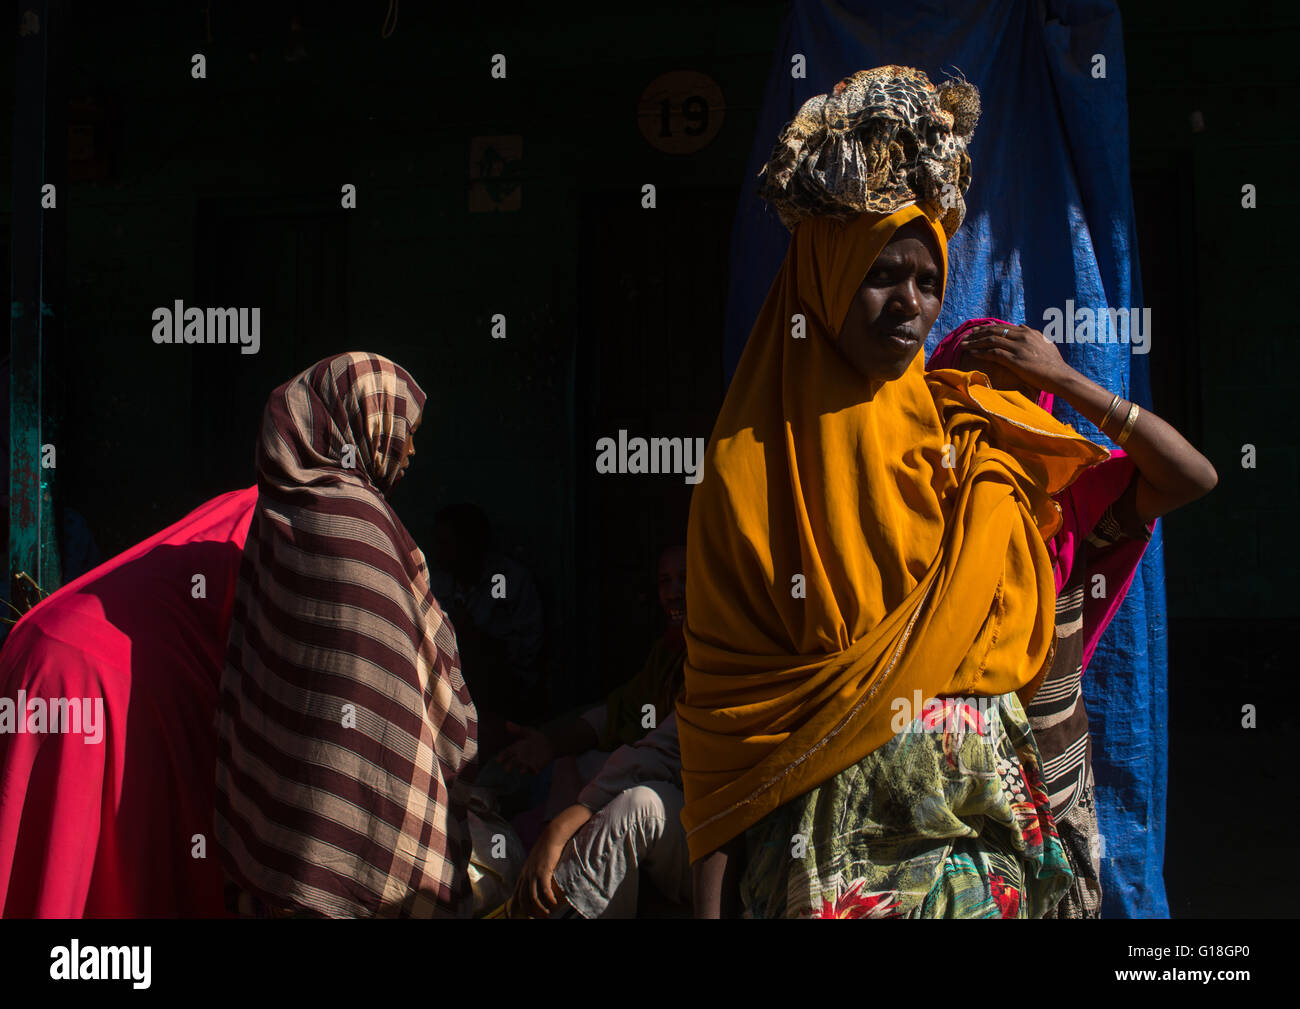 Women selling khat in the market near harar, Harari region, Awaday, Ethiopia Stock Photo